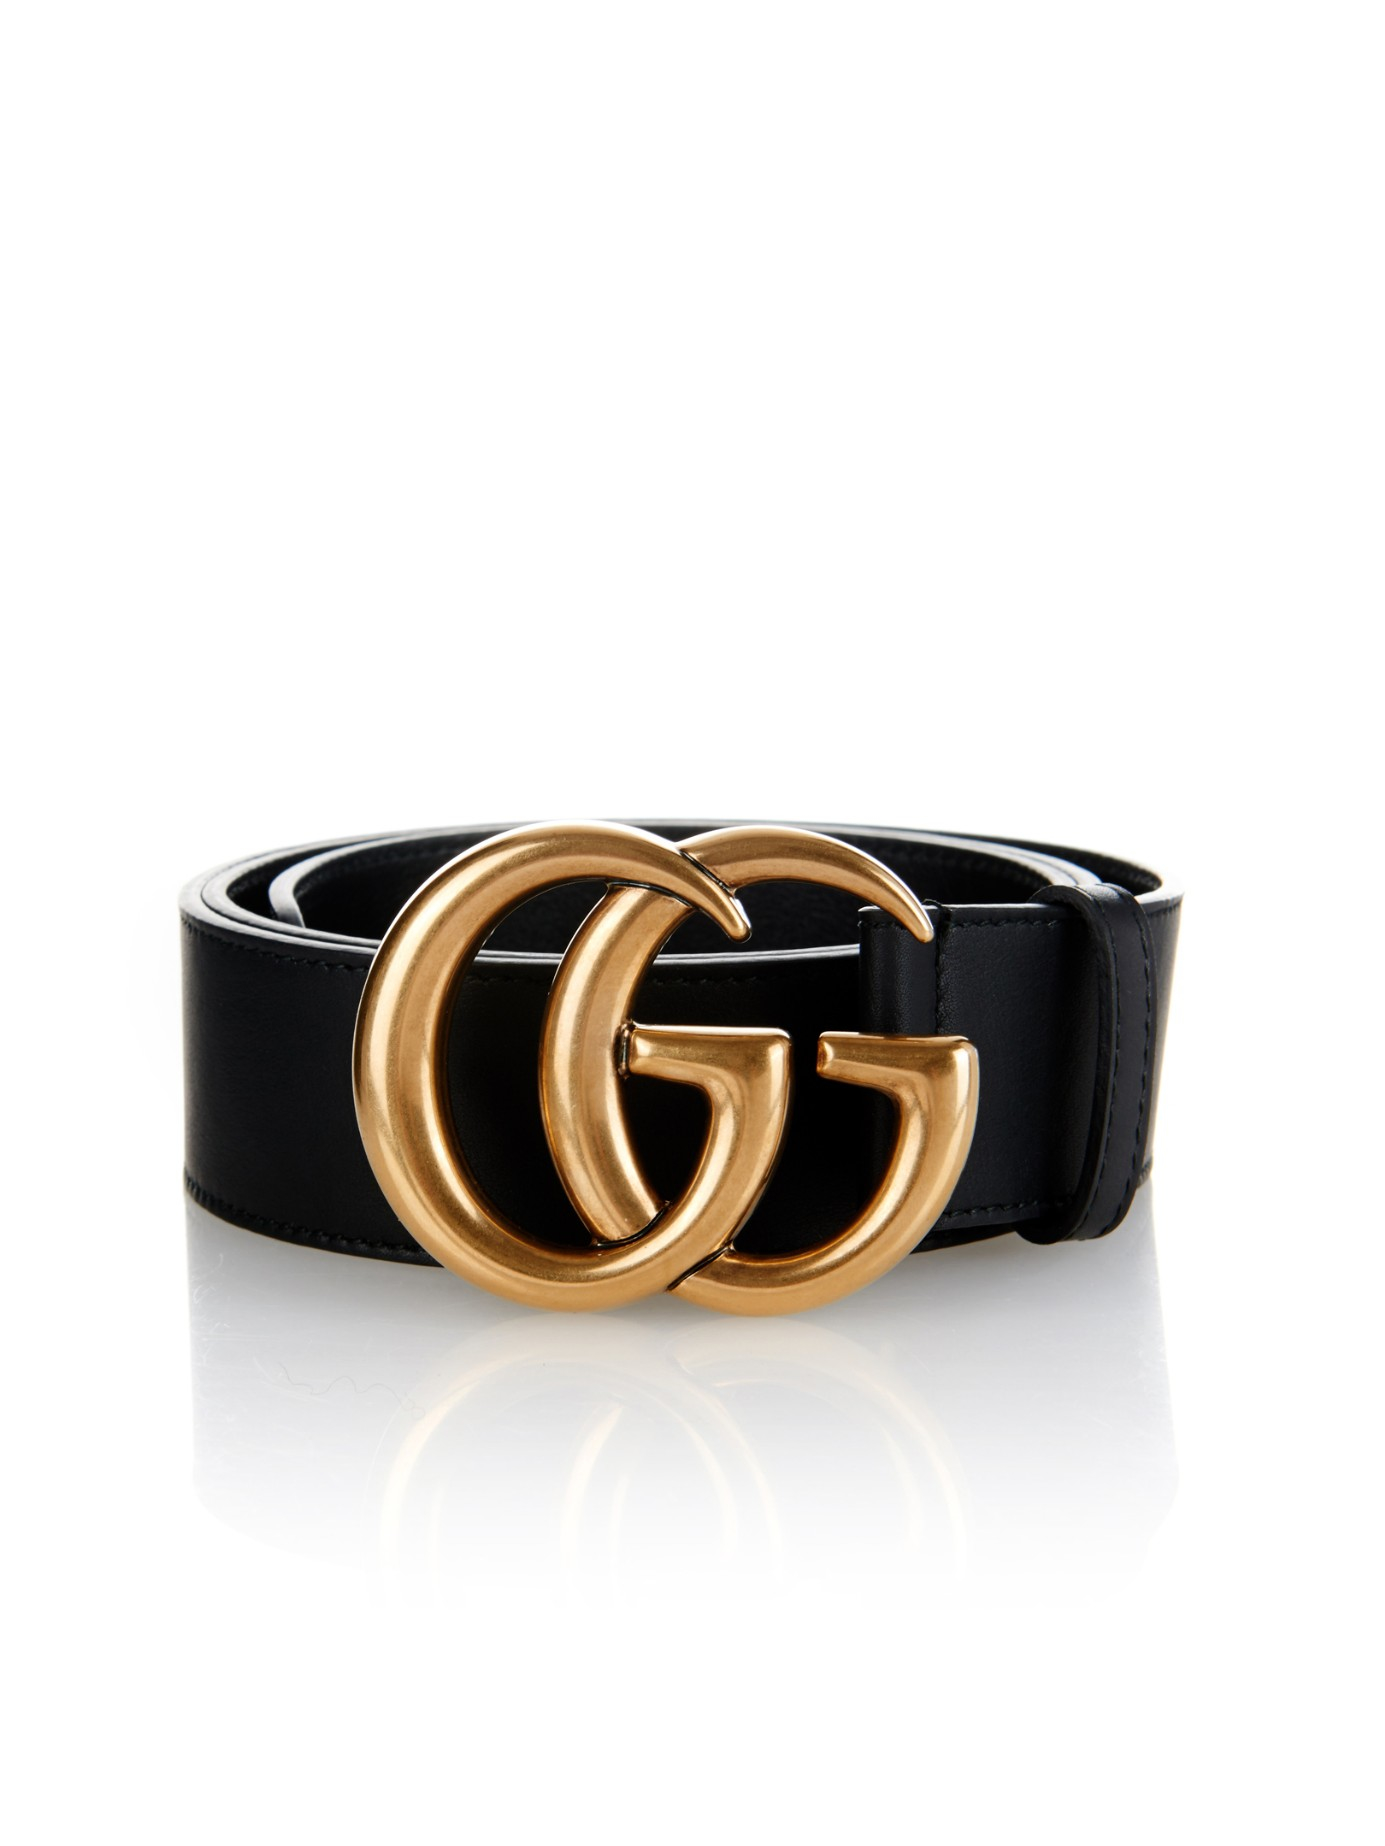 Gucci Gg-Logo Leather Belt in Black for Men - Lyst